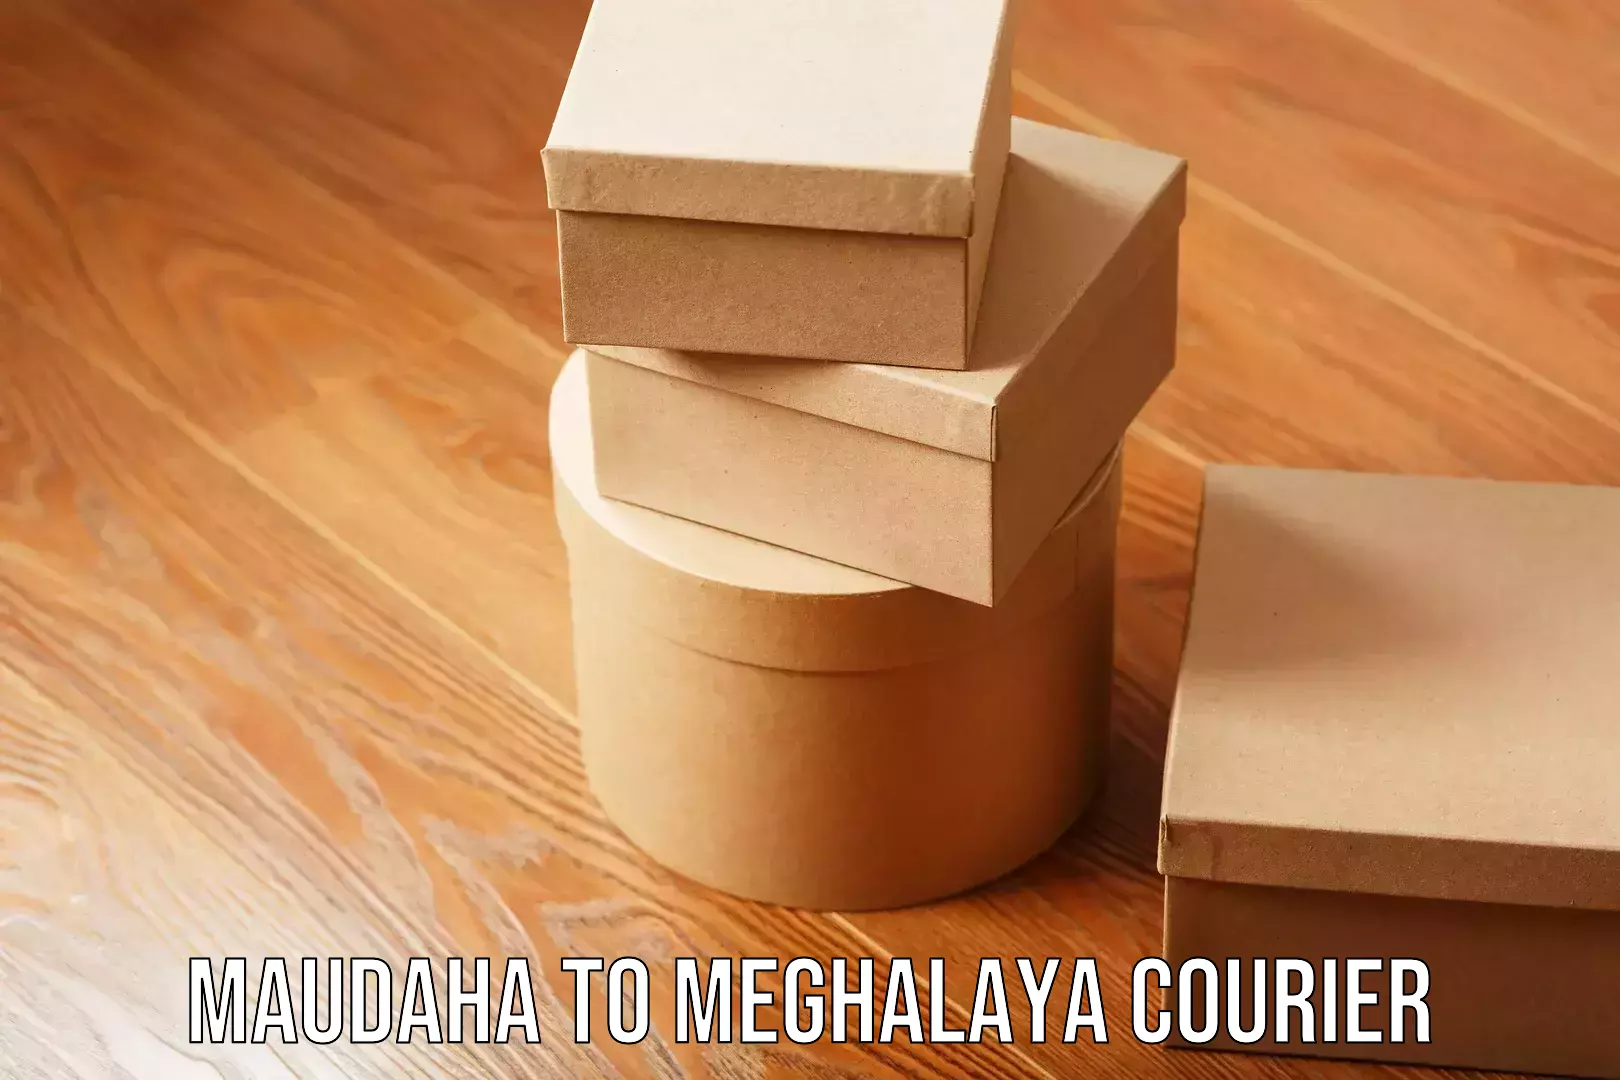 Moving and storage services Maudaha to Meghalaya